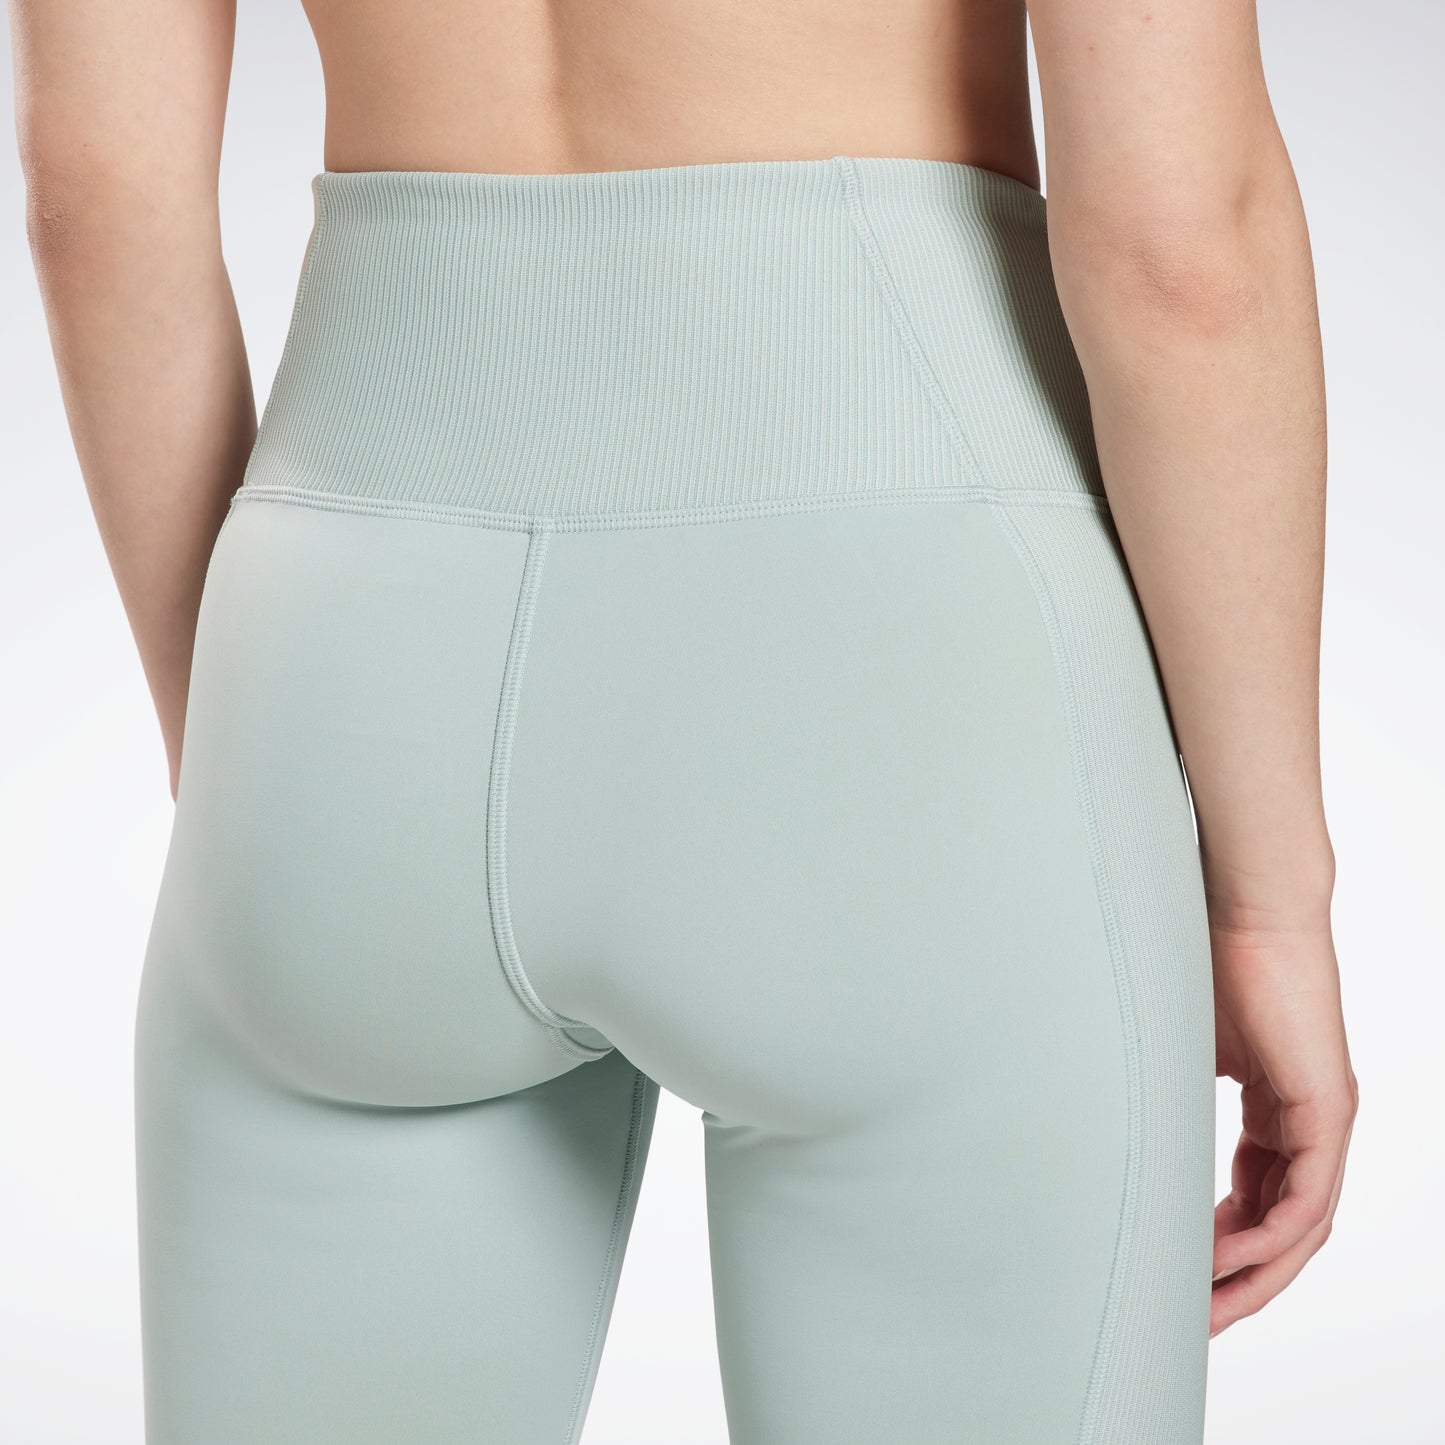 Carbon Fiber Yoga Capri Leggings for Women High Waistband Mid Calf Length  Printed Workout Pants With High Performance Design Non See Through -   Canada